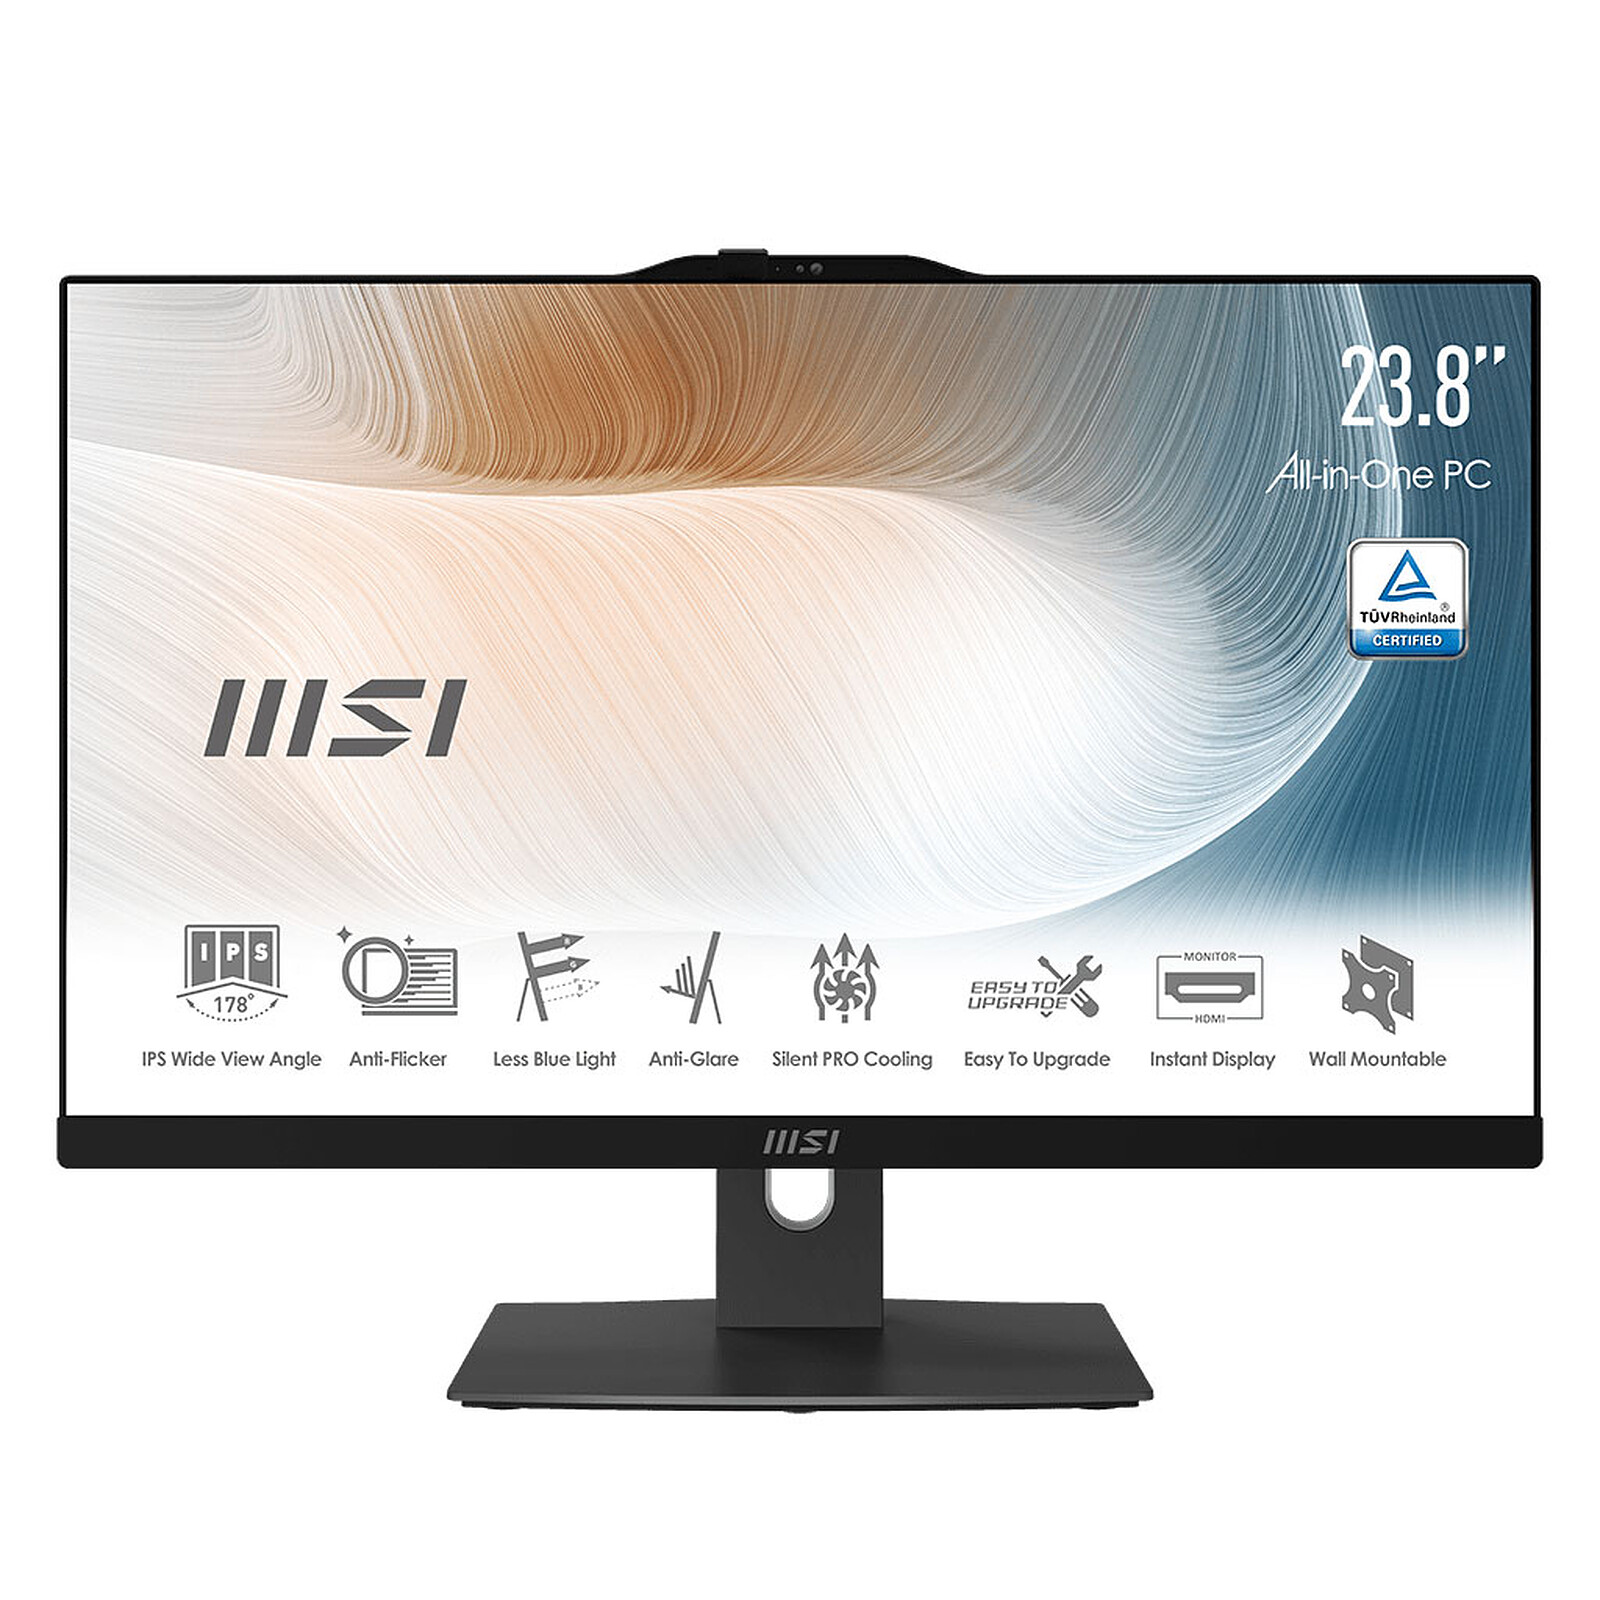 Pc Ips Type-c Écran secondaire, Ips USB Mini écran Pc Cpu HDD Data Monitor